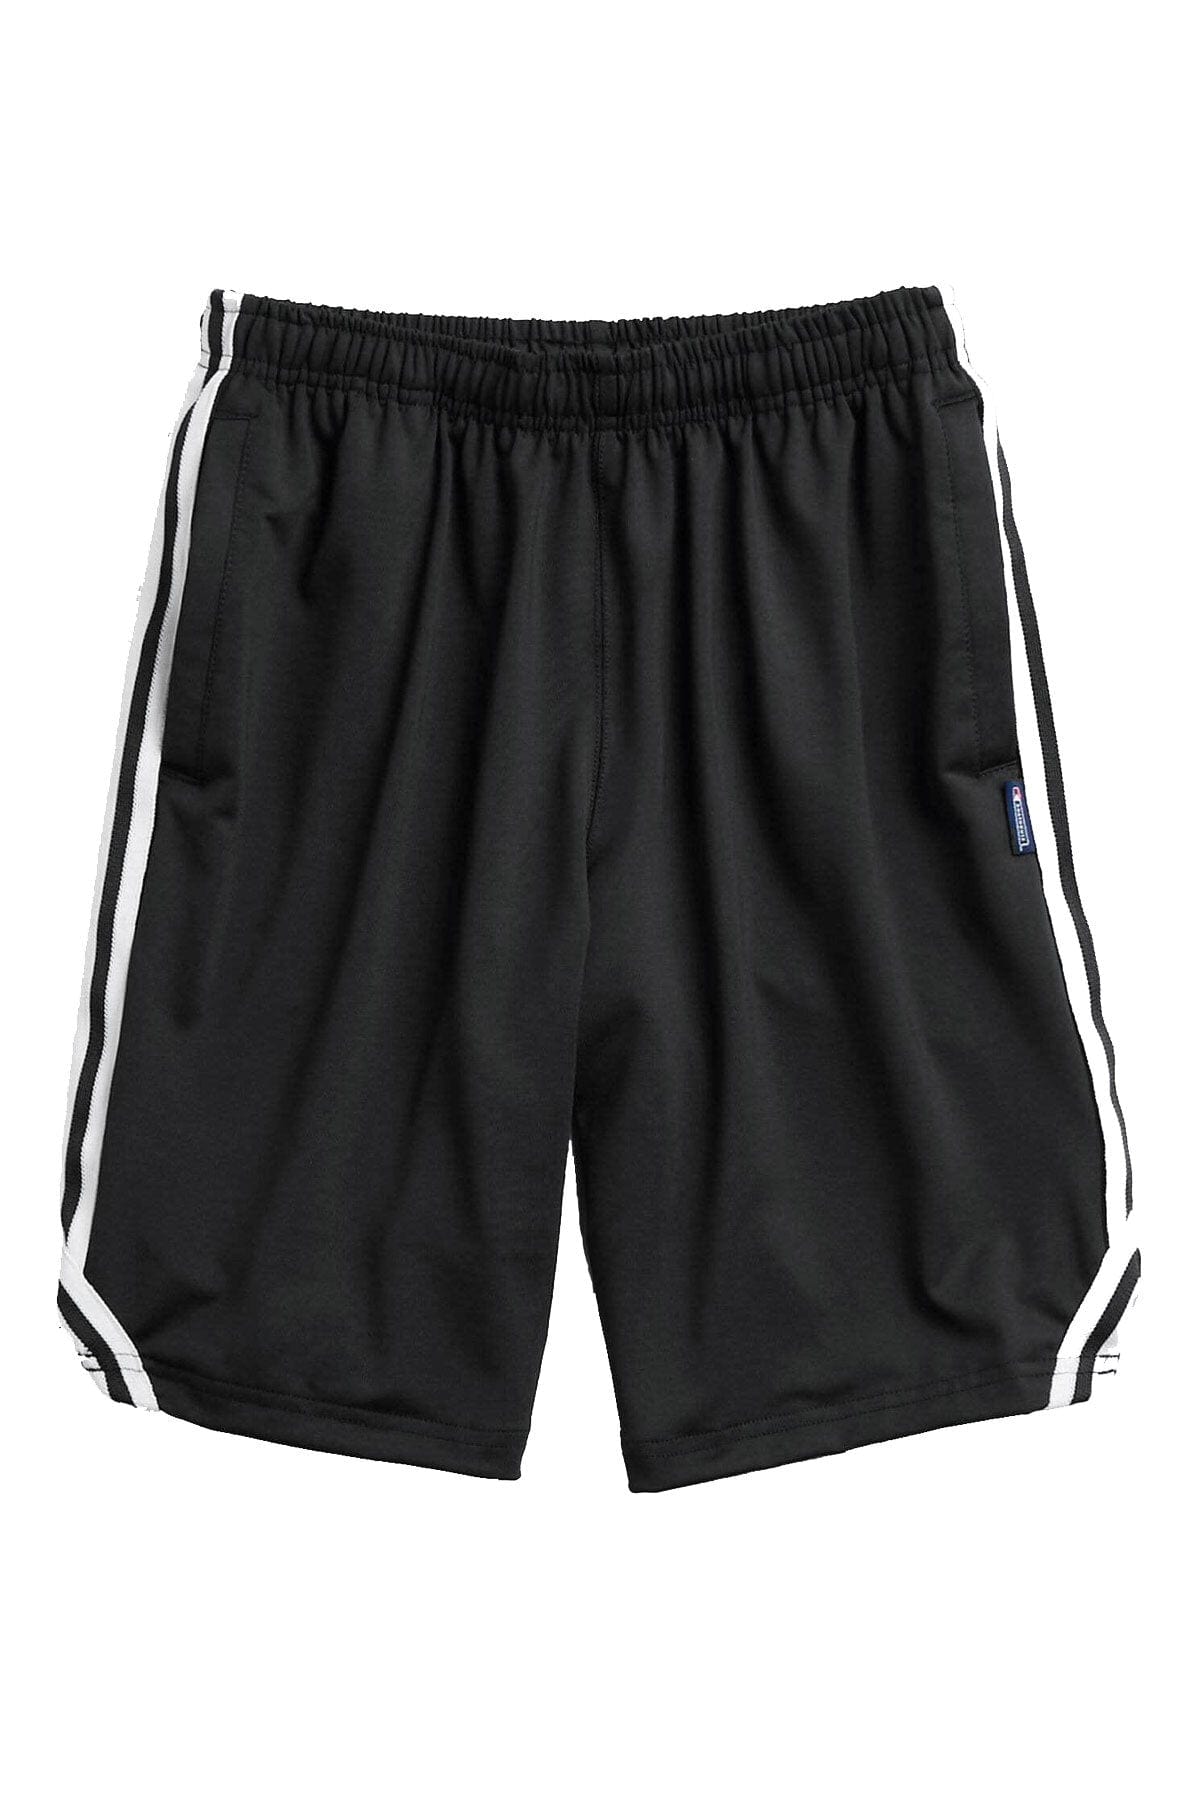 BOATHOUSE Men's Liberty Shorts